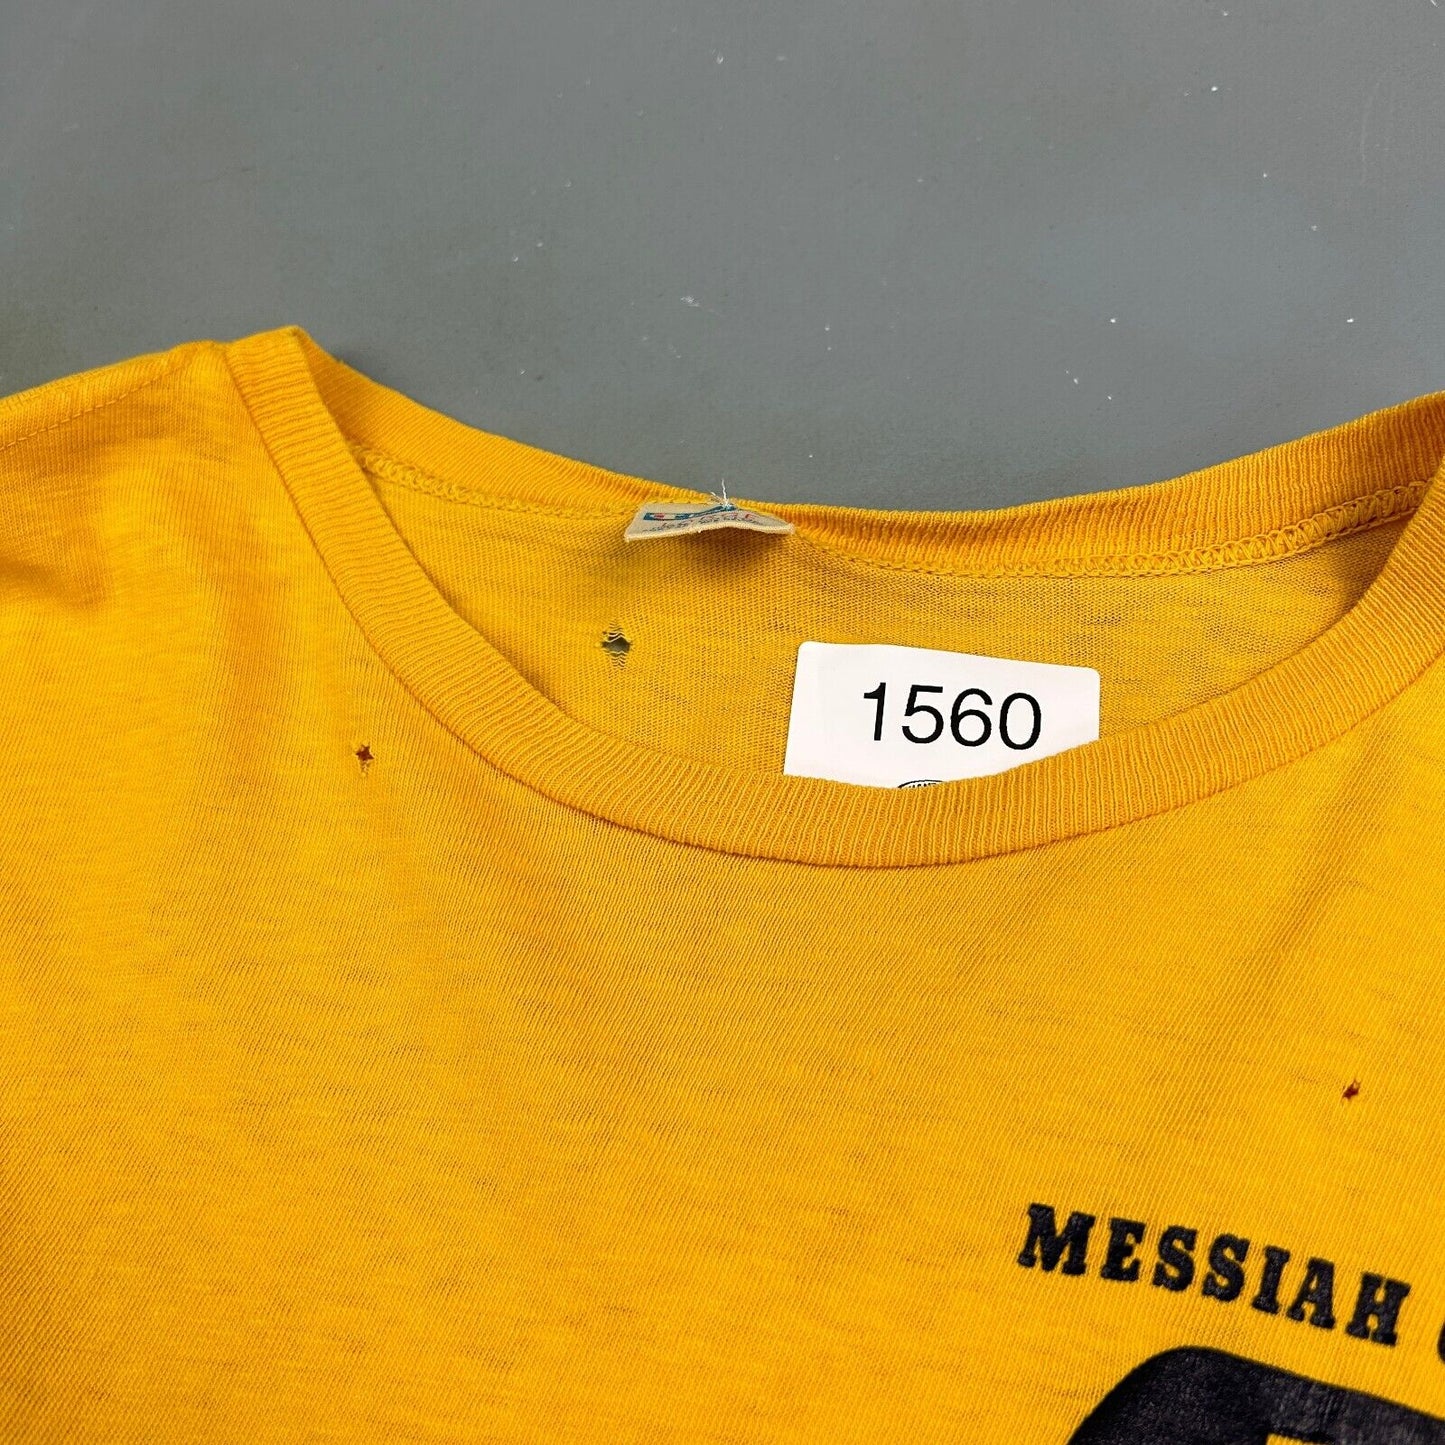 VINTAGE 70s | Messiah College Cross Country Champion T-Shirt sz S-M Men Adult